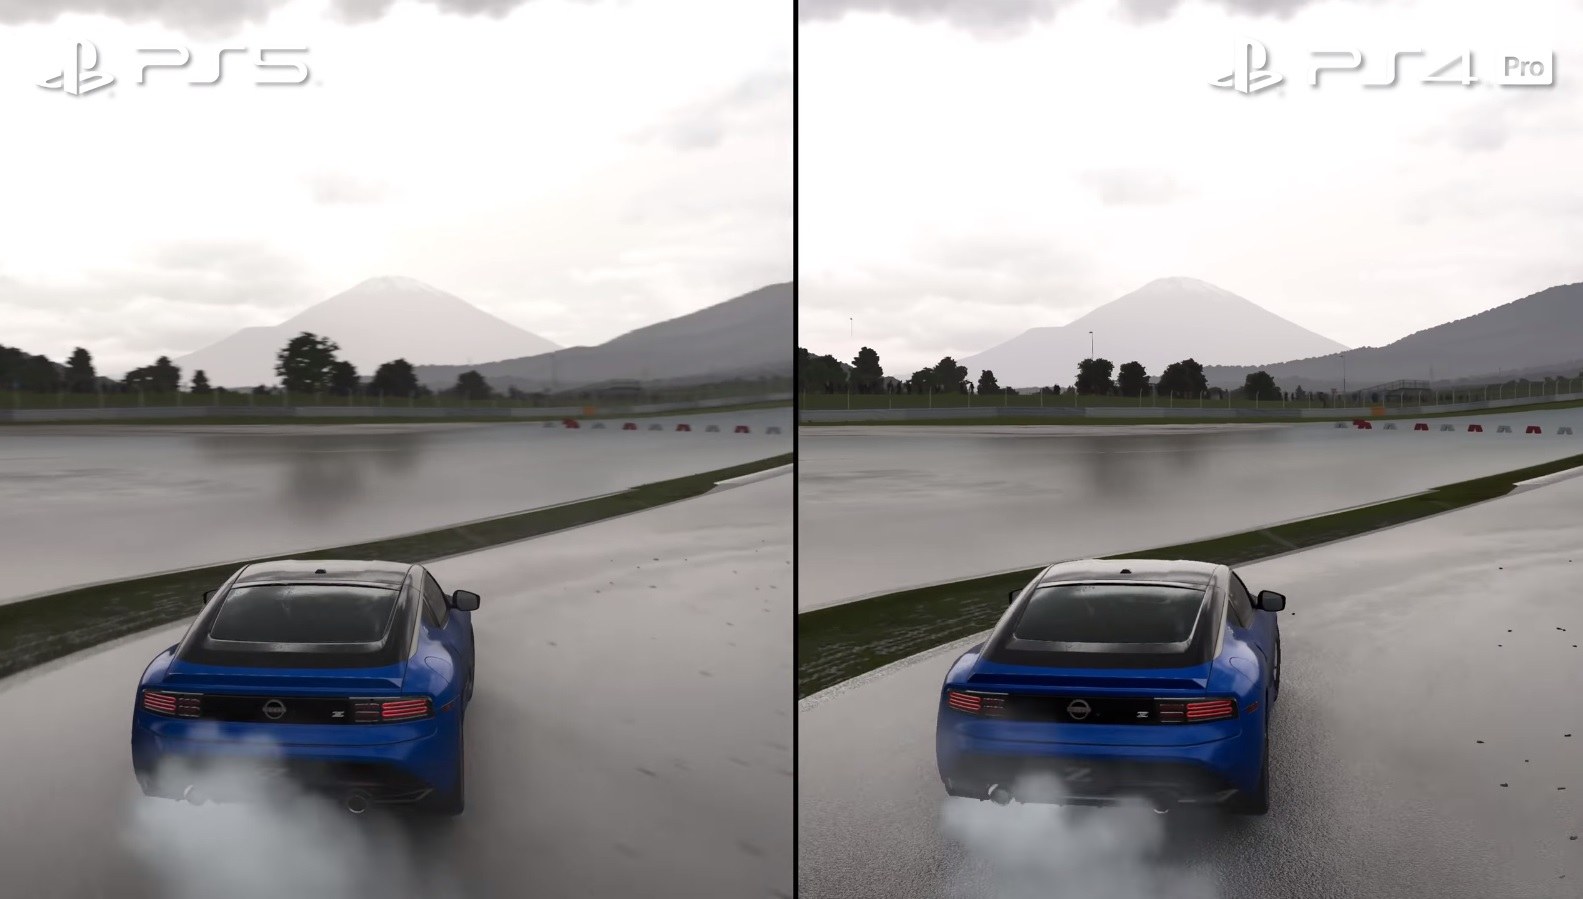 Gran Turismo 7 Comparison - PS4 vs. PS4 Pro vs. PS5 (Ray Tracing & Frame  Rate Modes) 